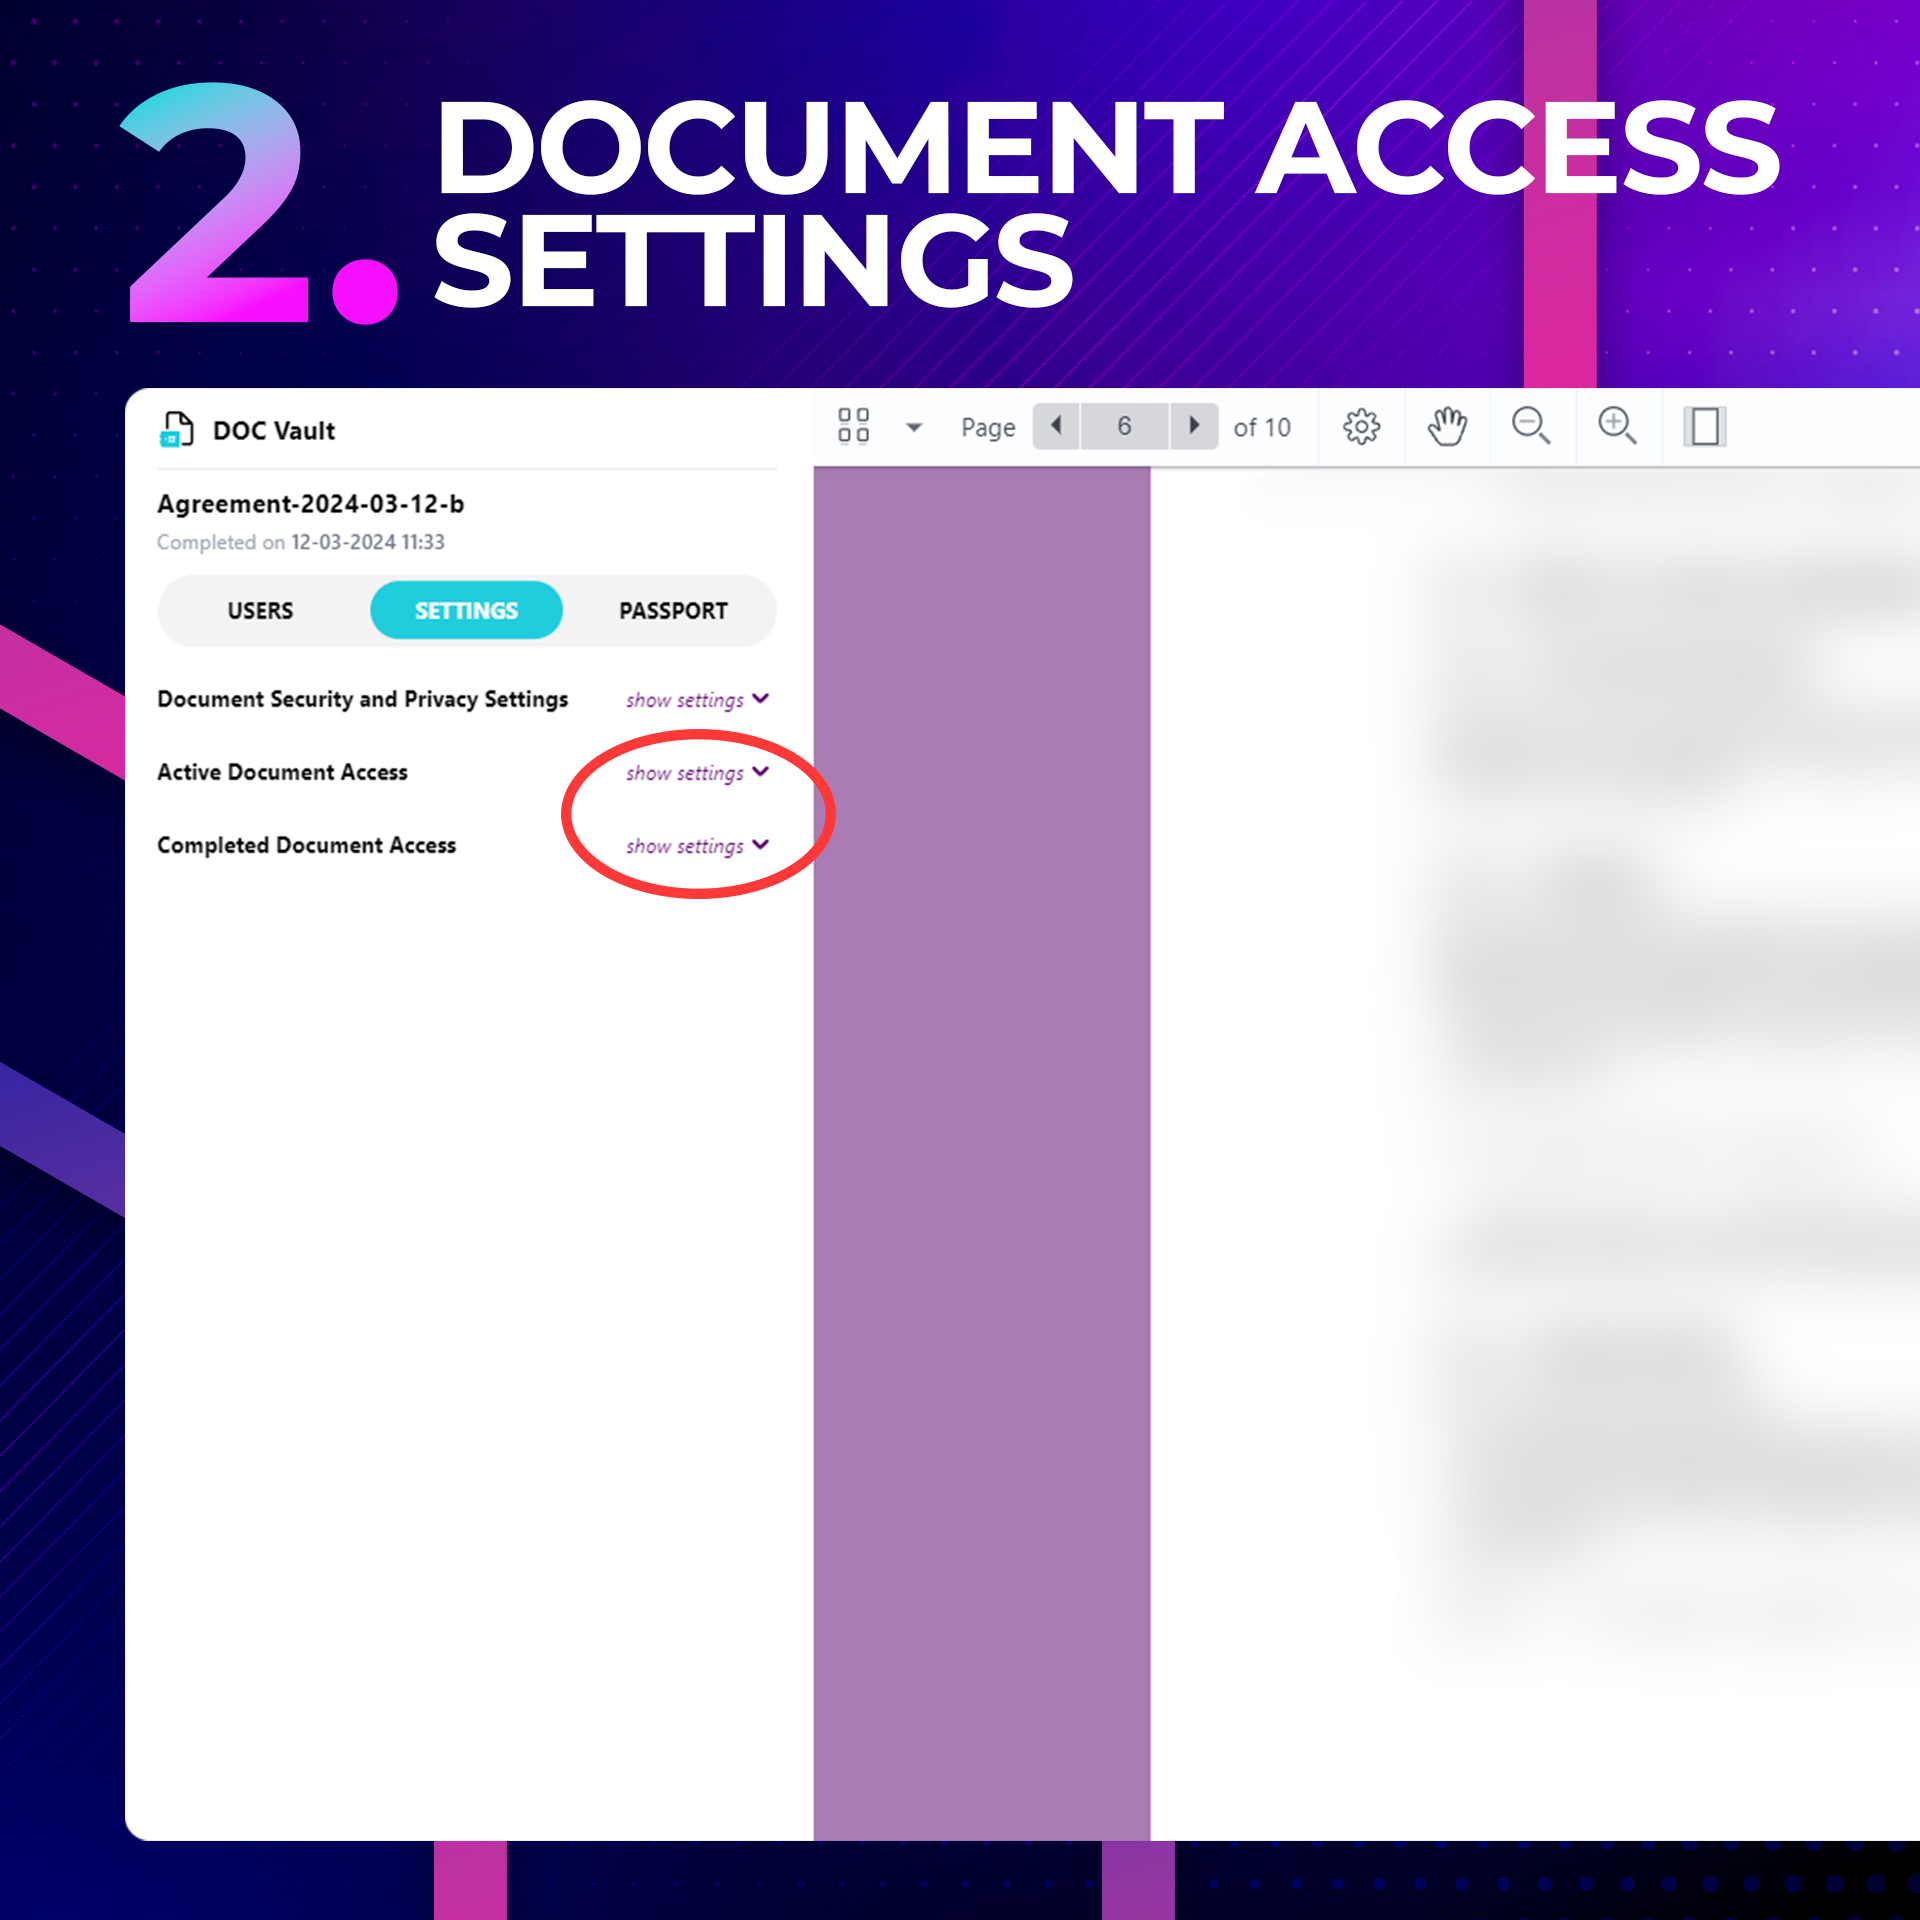 2. Document Access Settings